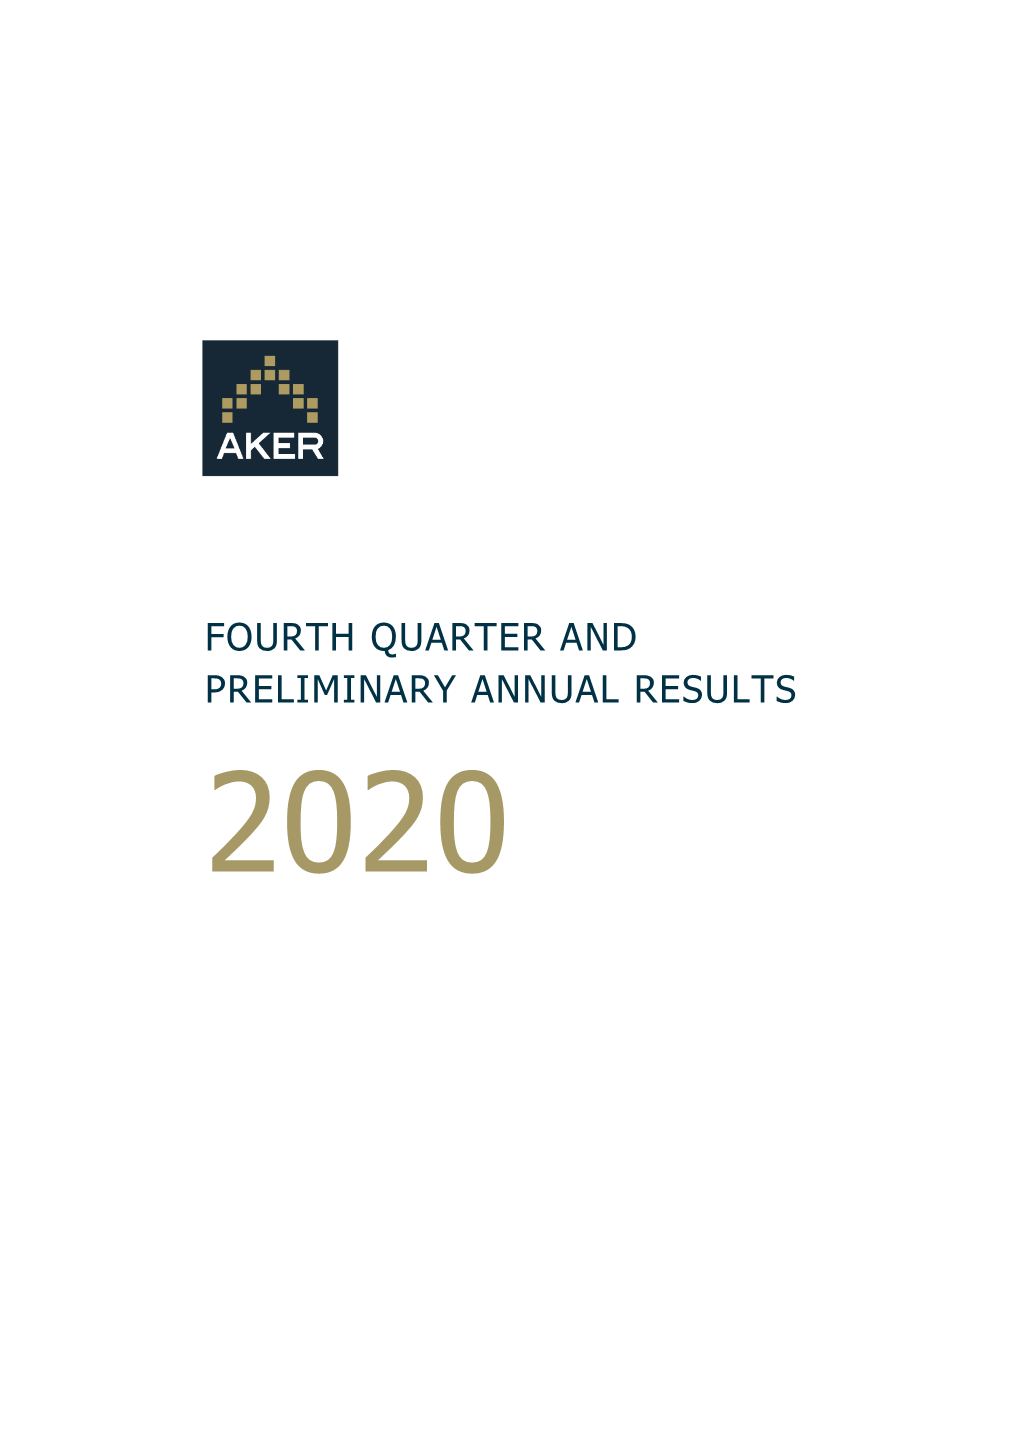 Fourth Quarter and Preliminary Annual Results 2020